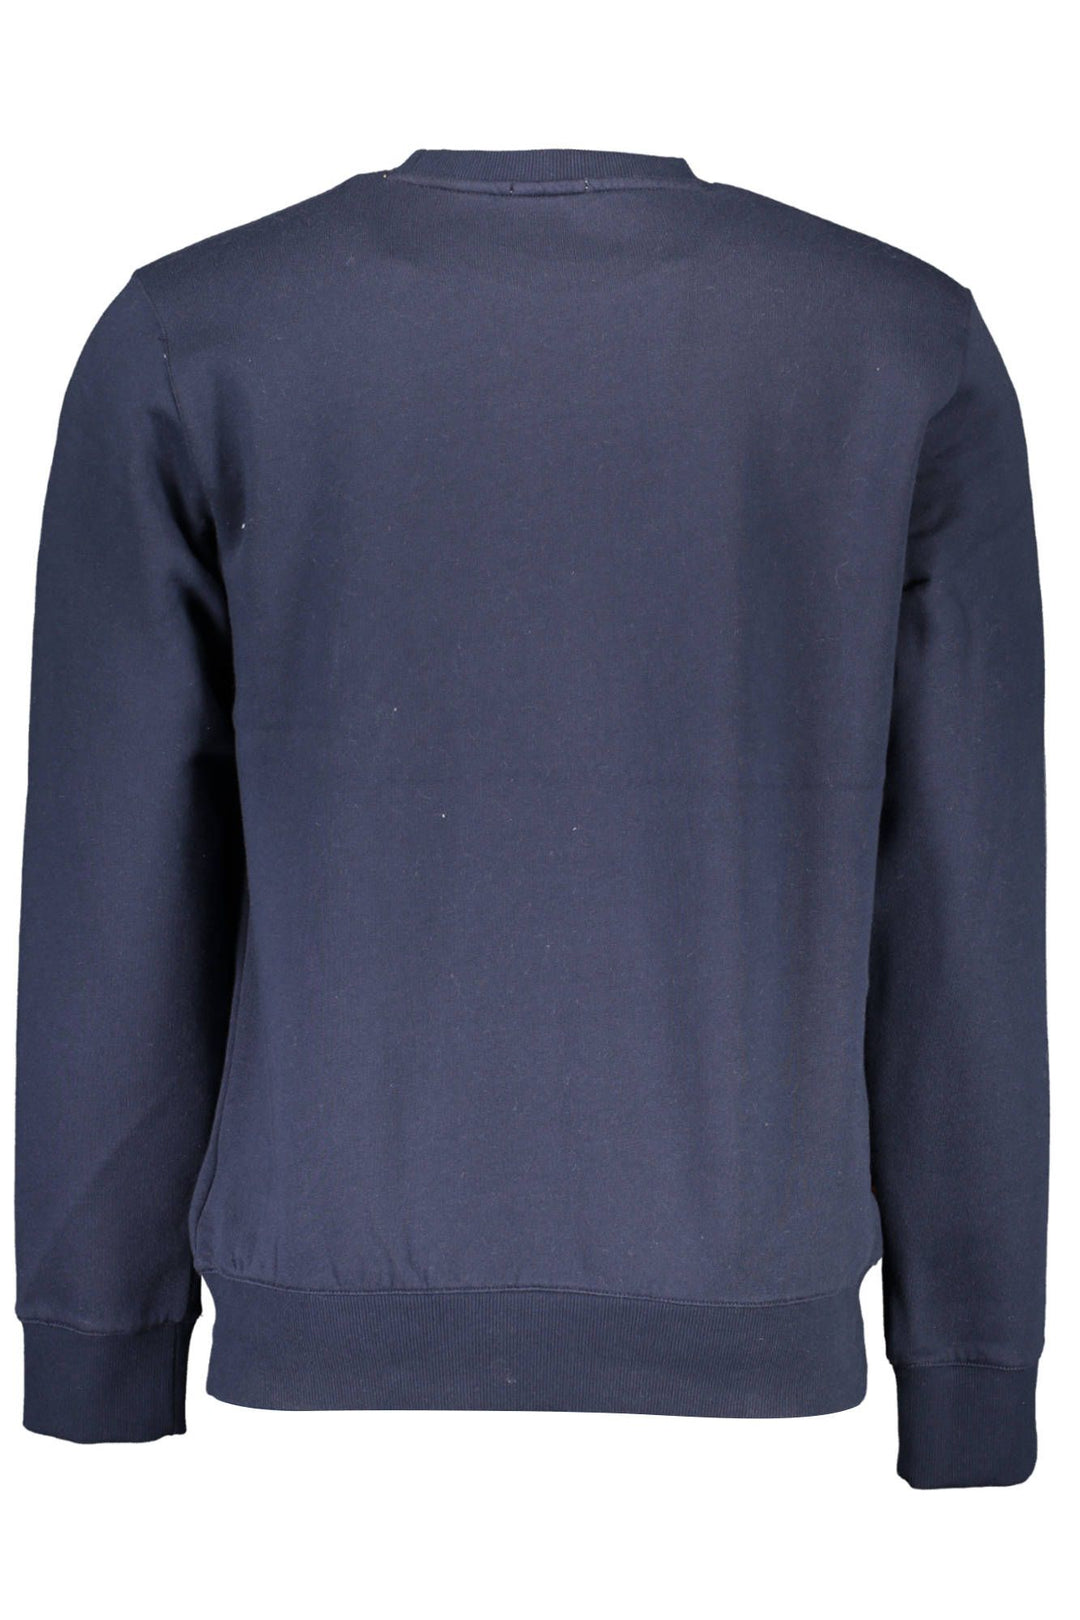 Timberland Chic Blue Organic Cotton Sweatshirt